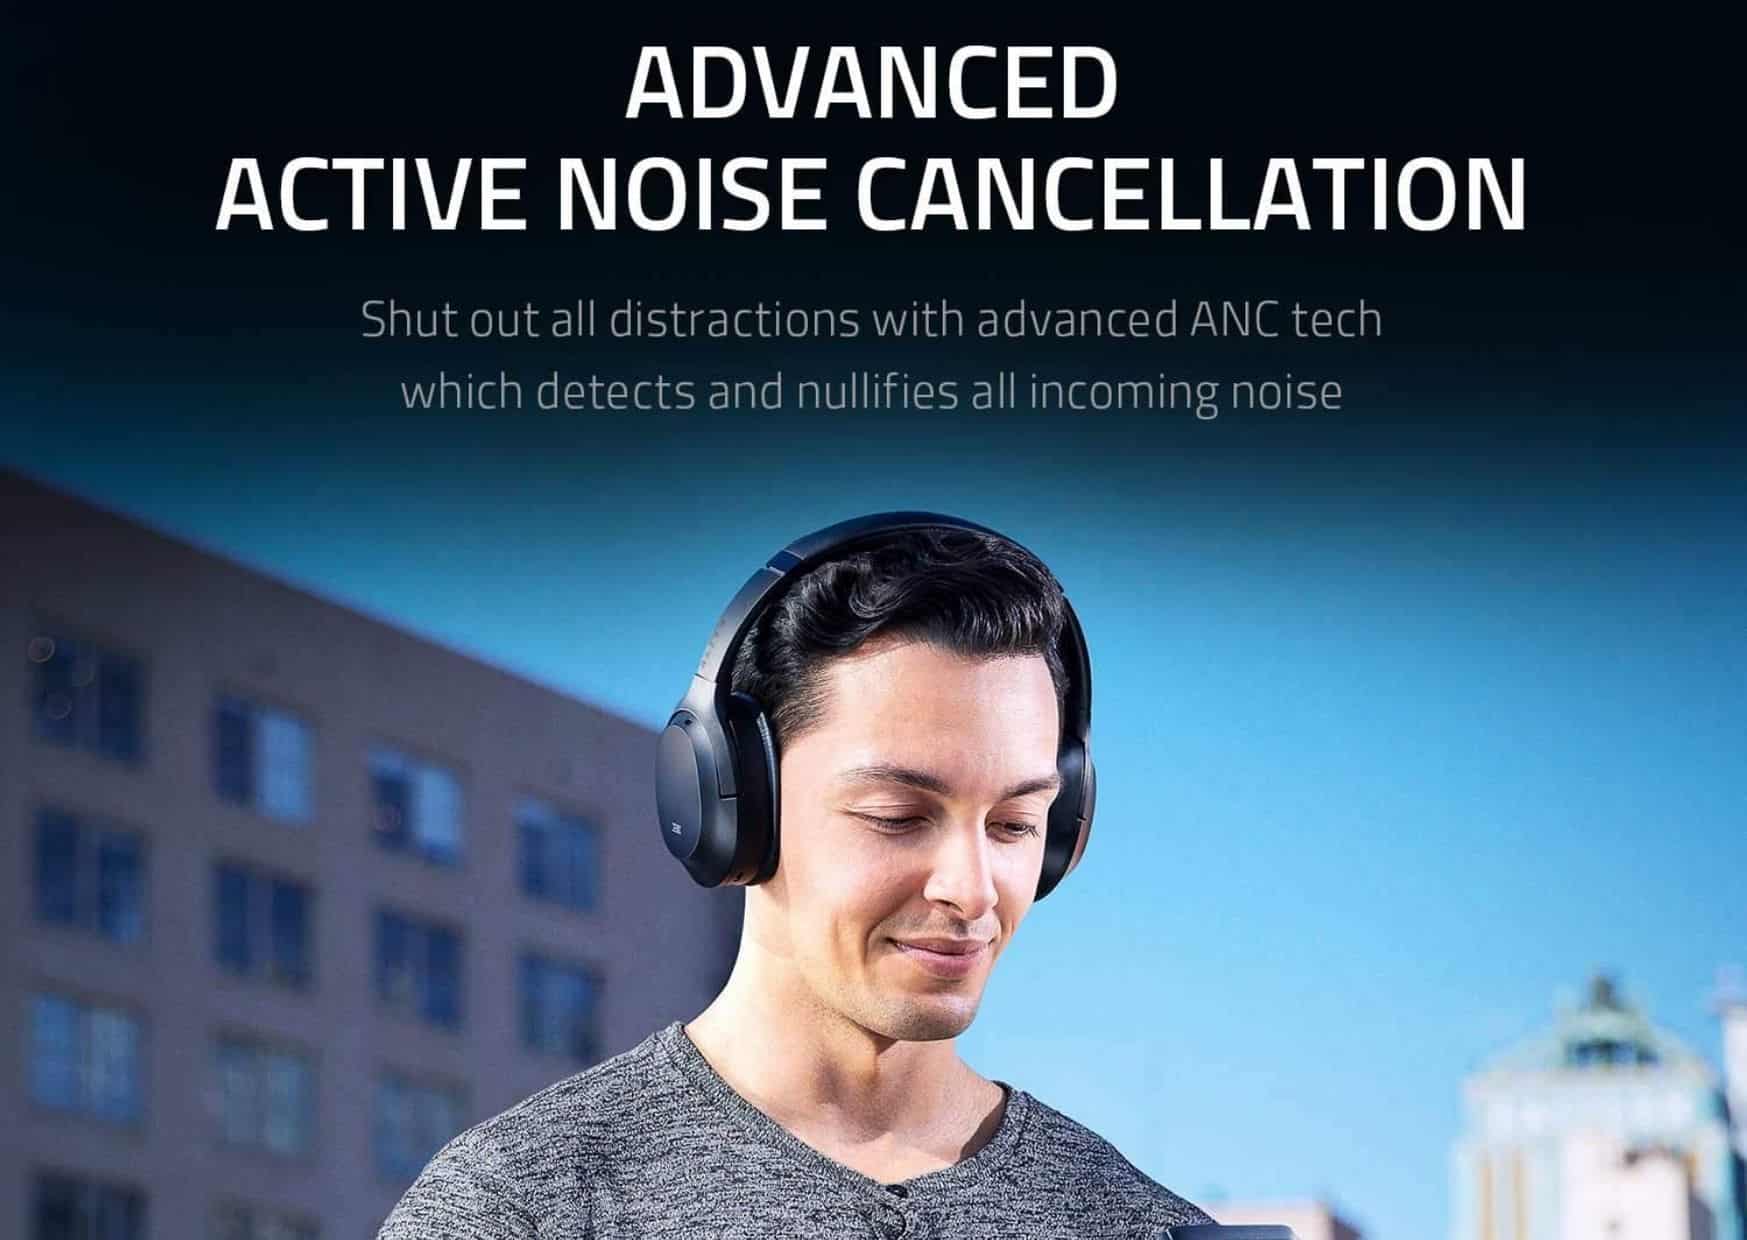 7 Best Noise-Canceling Headphones to Help You Focus